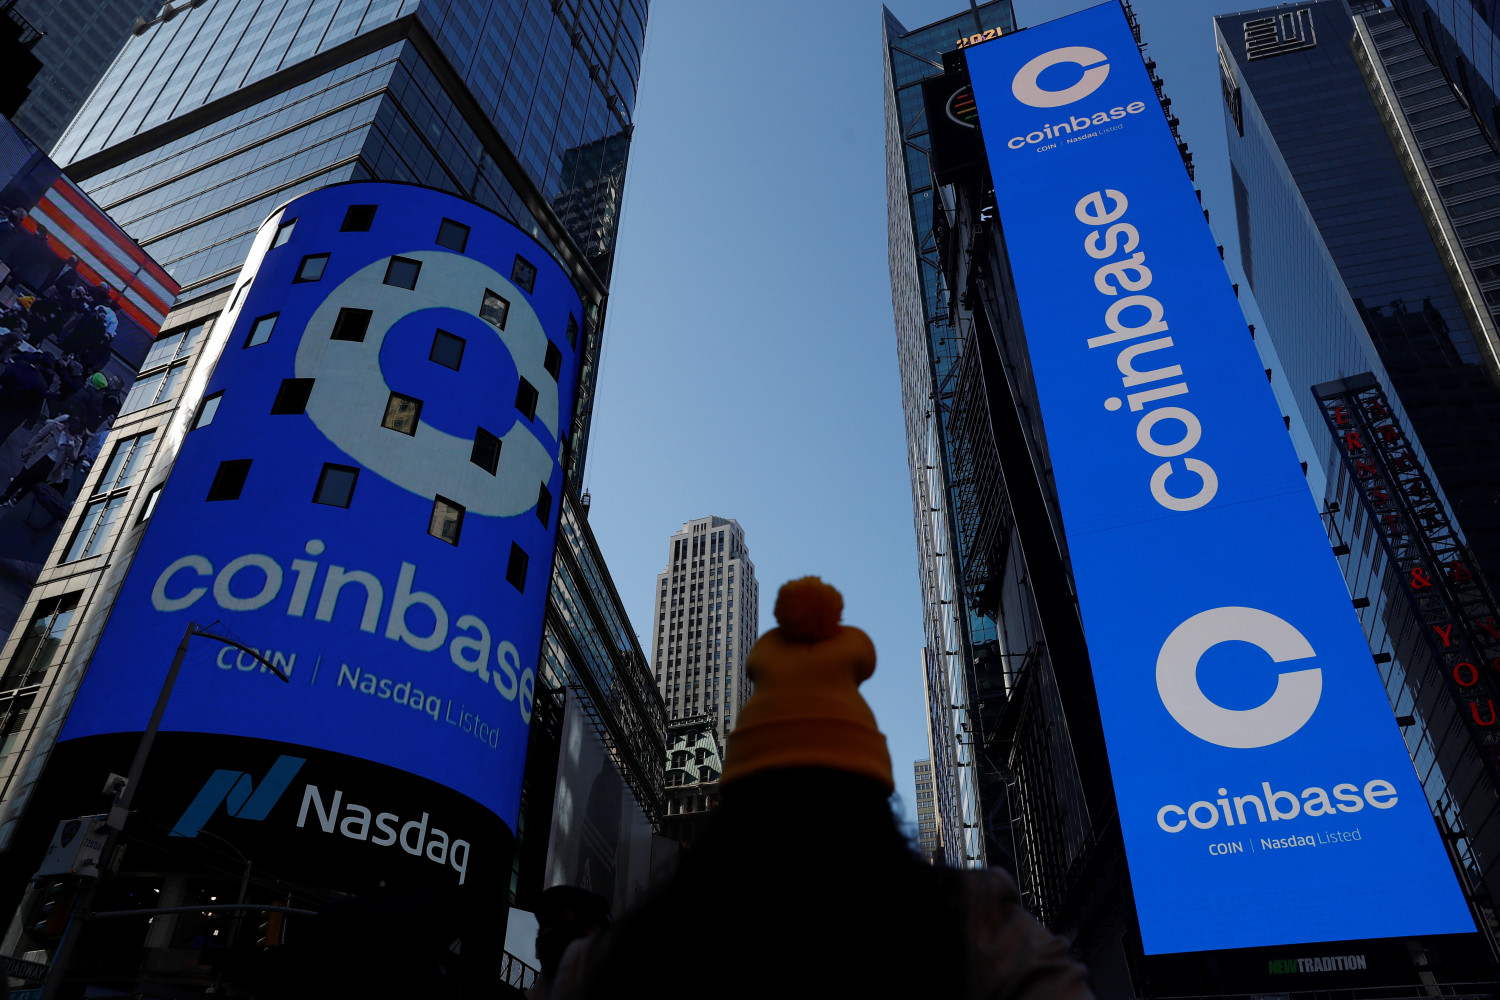 coinbase valorisee pres de 100 milliards de dollars pour ses debuts en bourse 20230110154515 